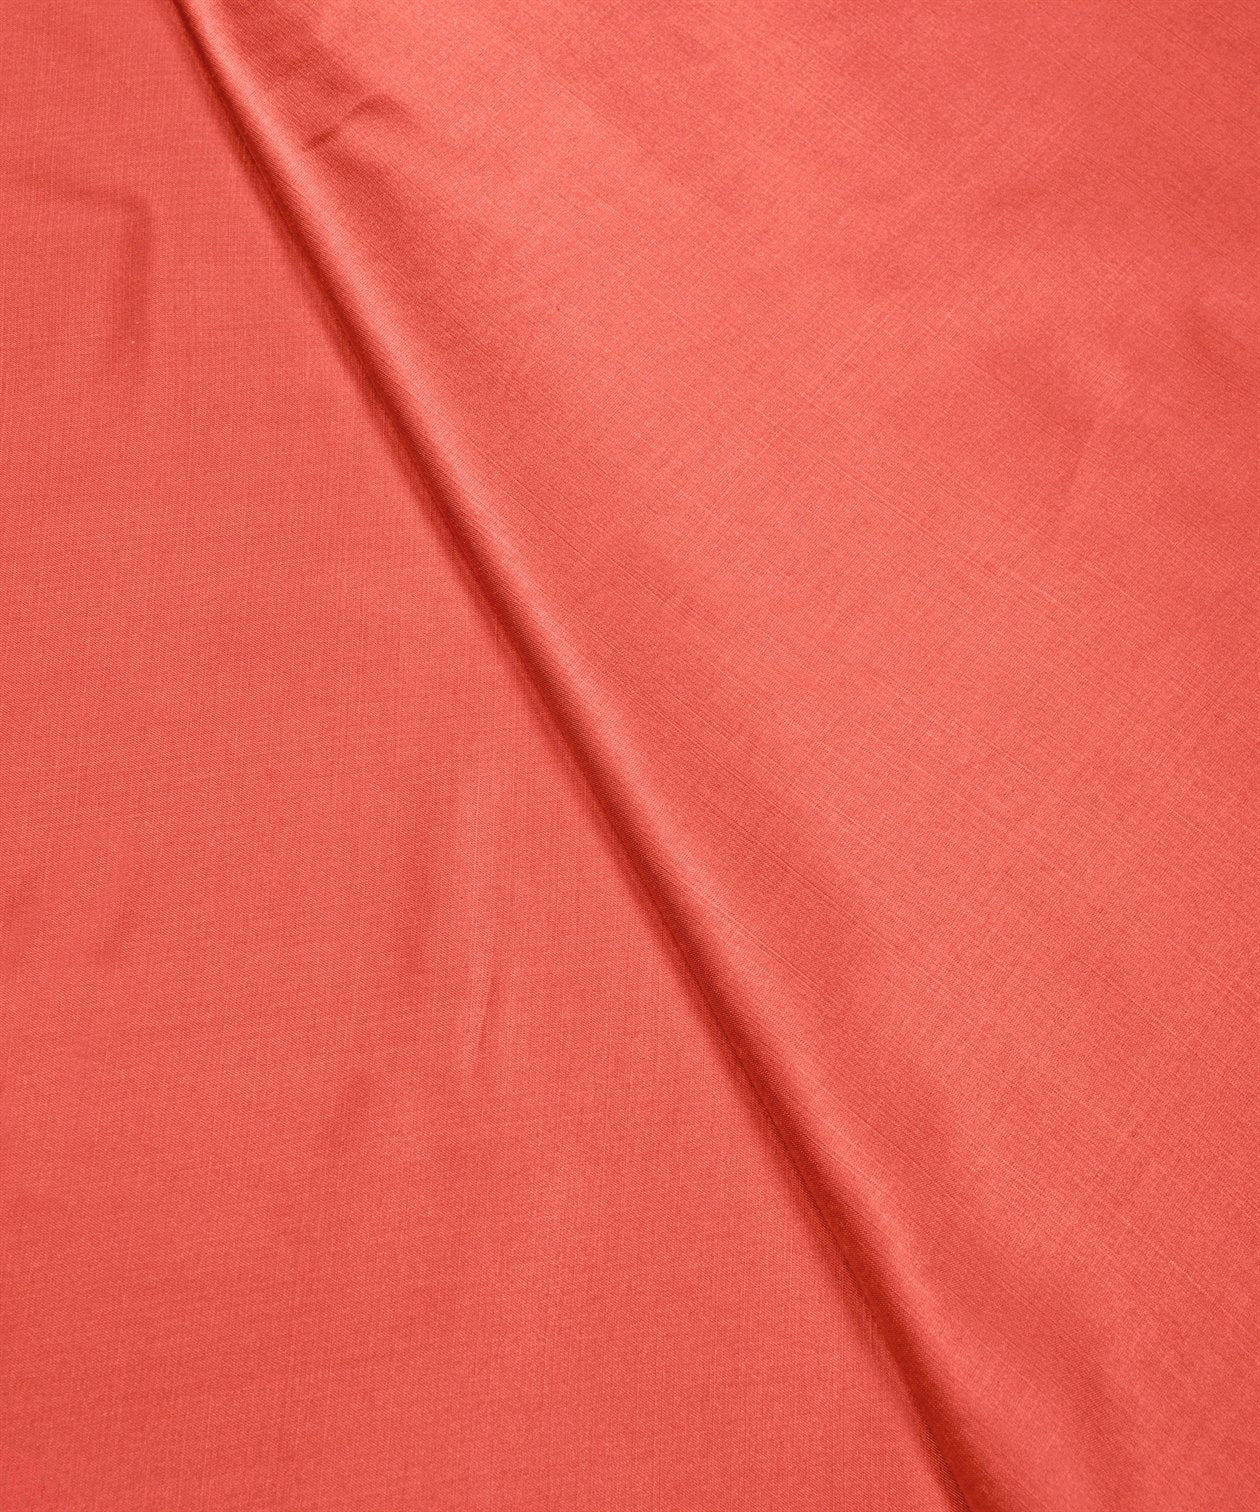 Light Bean Red Plain Dyed Modal Satin Fabric